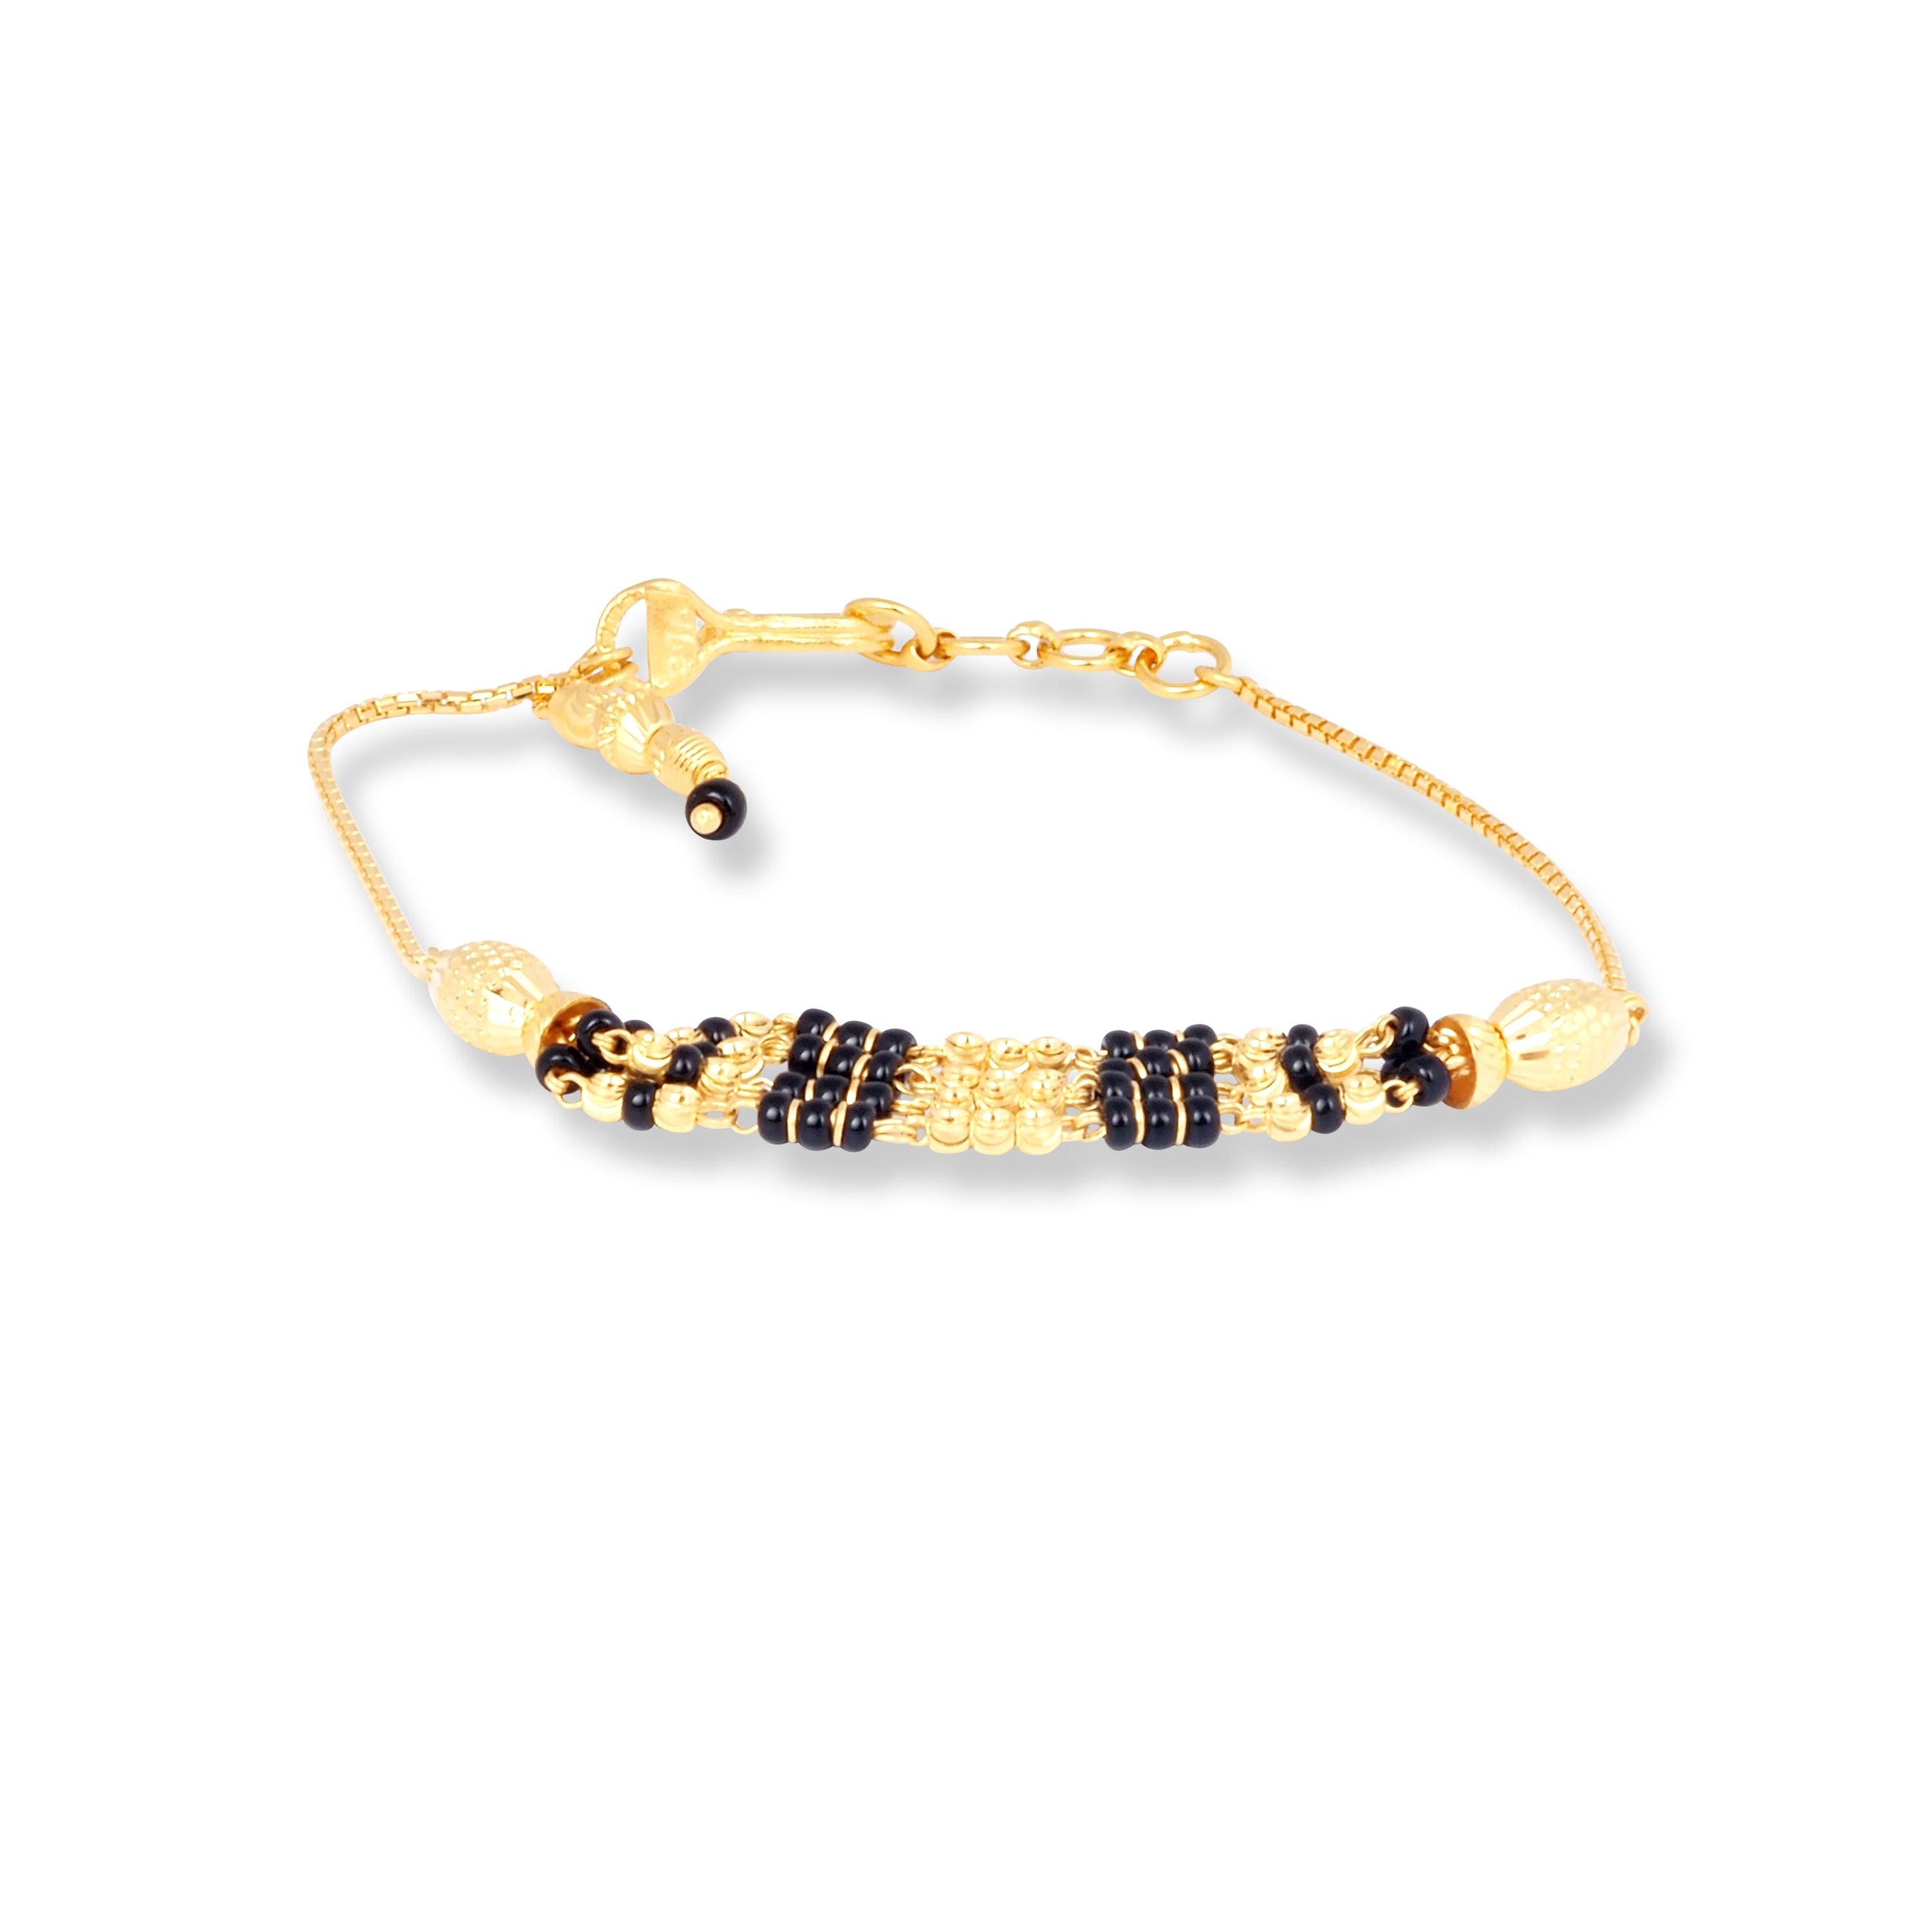 22ct Gold Ladies Bracelet with Hematite & Diamond Cutting Bead Design with U Hook Clasp (5.8g) LBR-7146 - Minar Jewellers